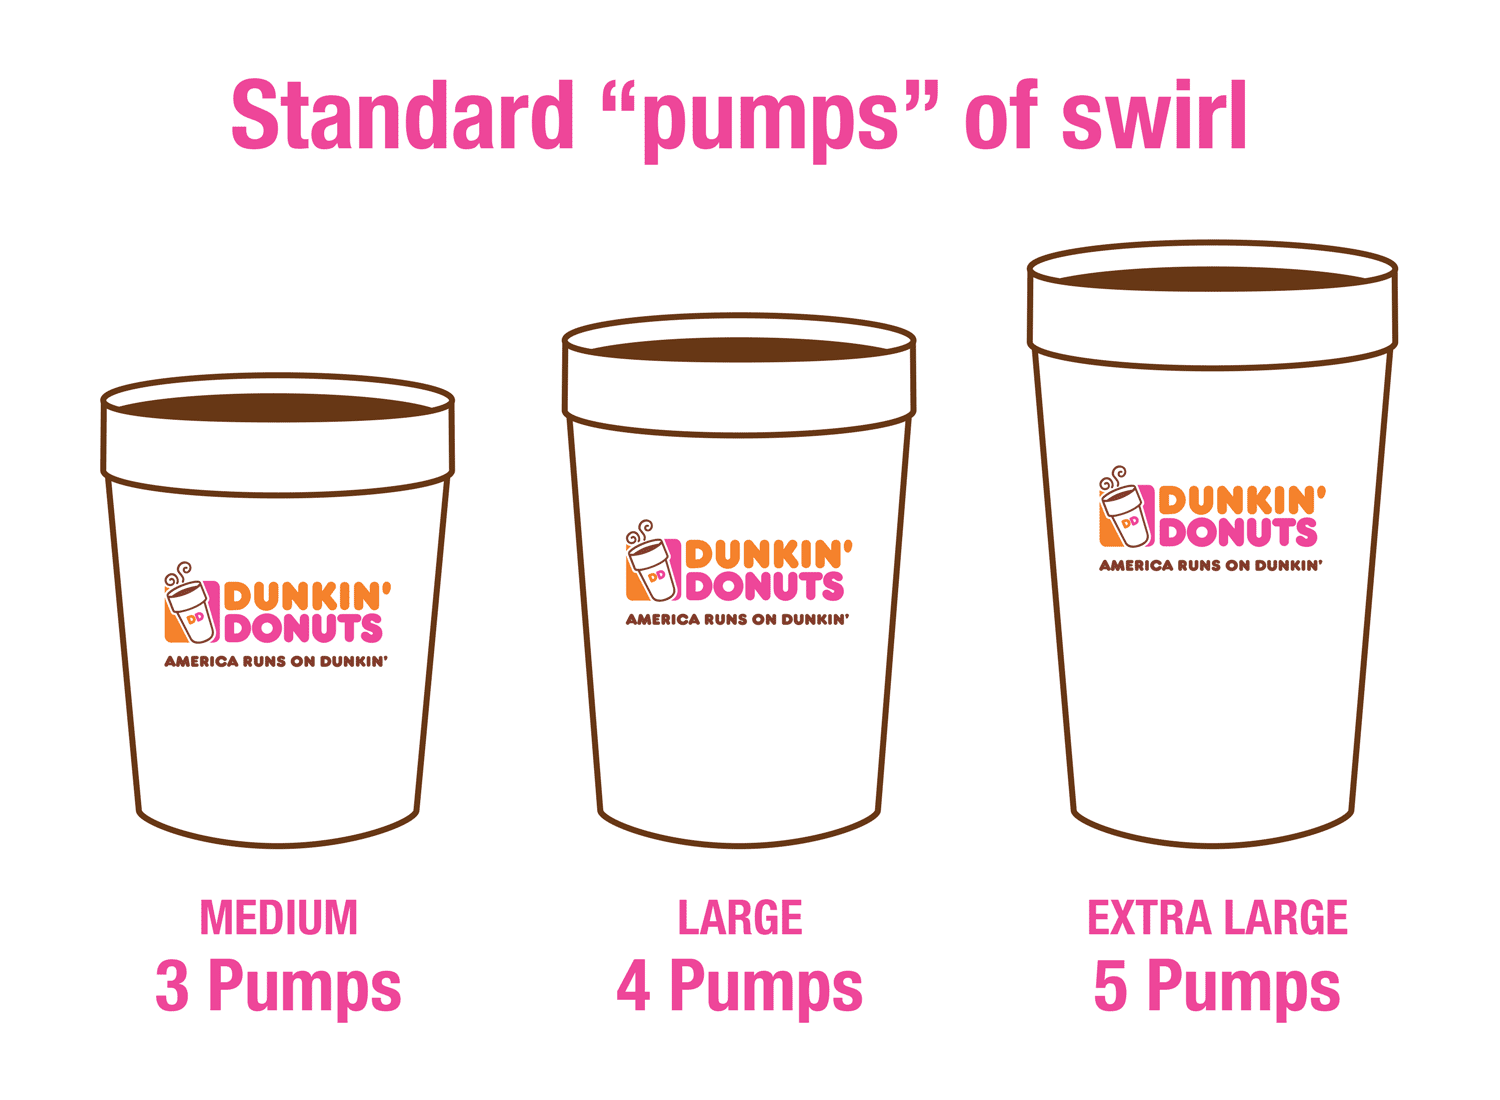 Standard flavor swirl pumps for Dunkin' Donuts coffee